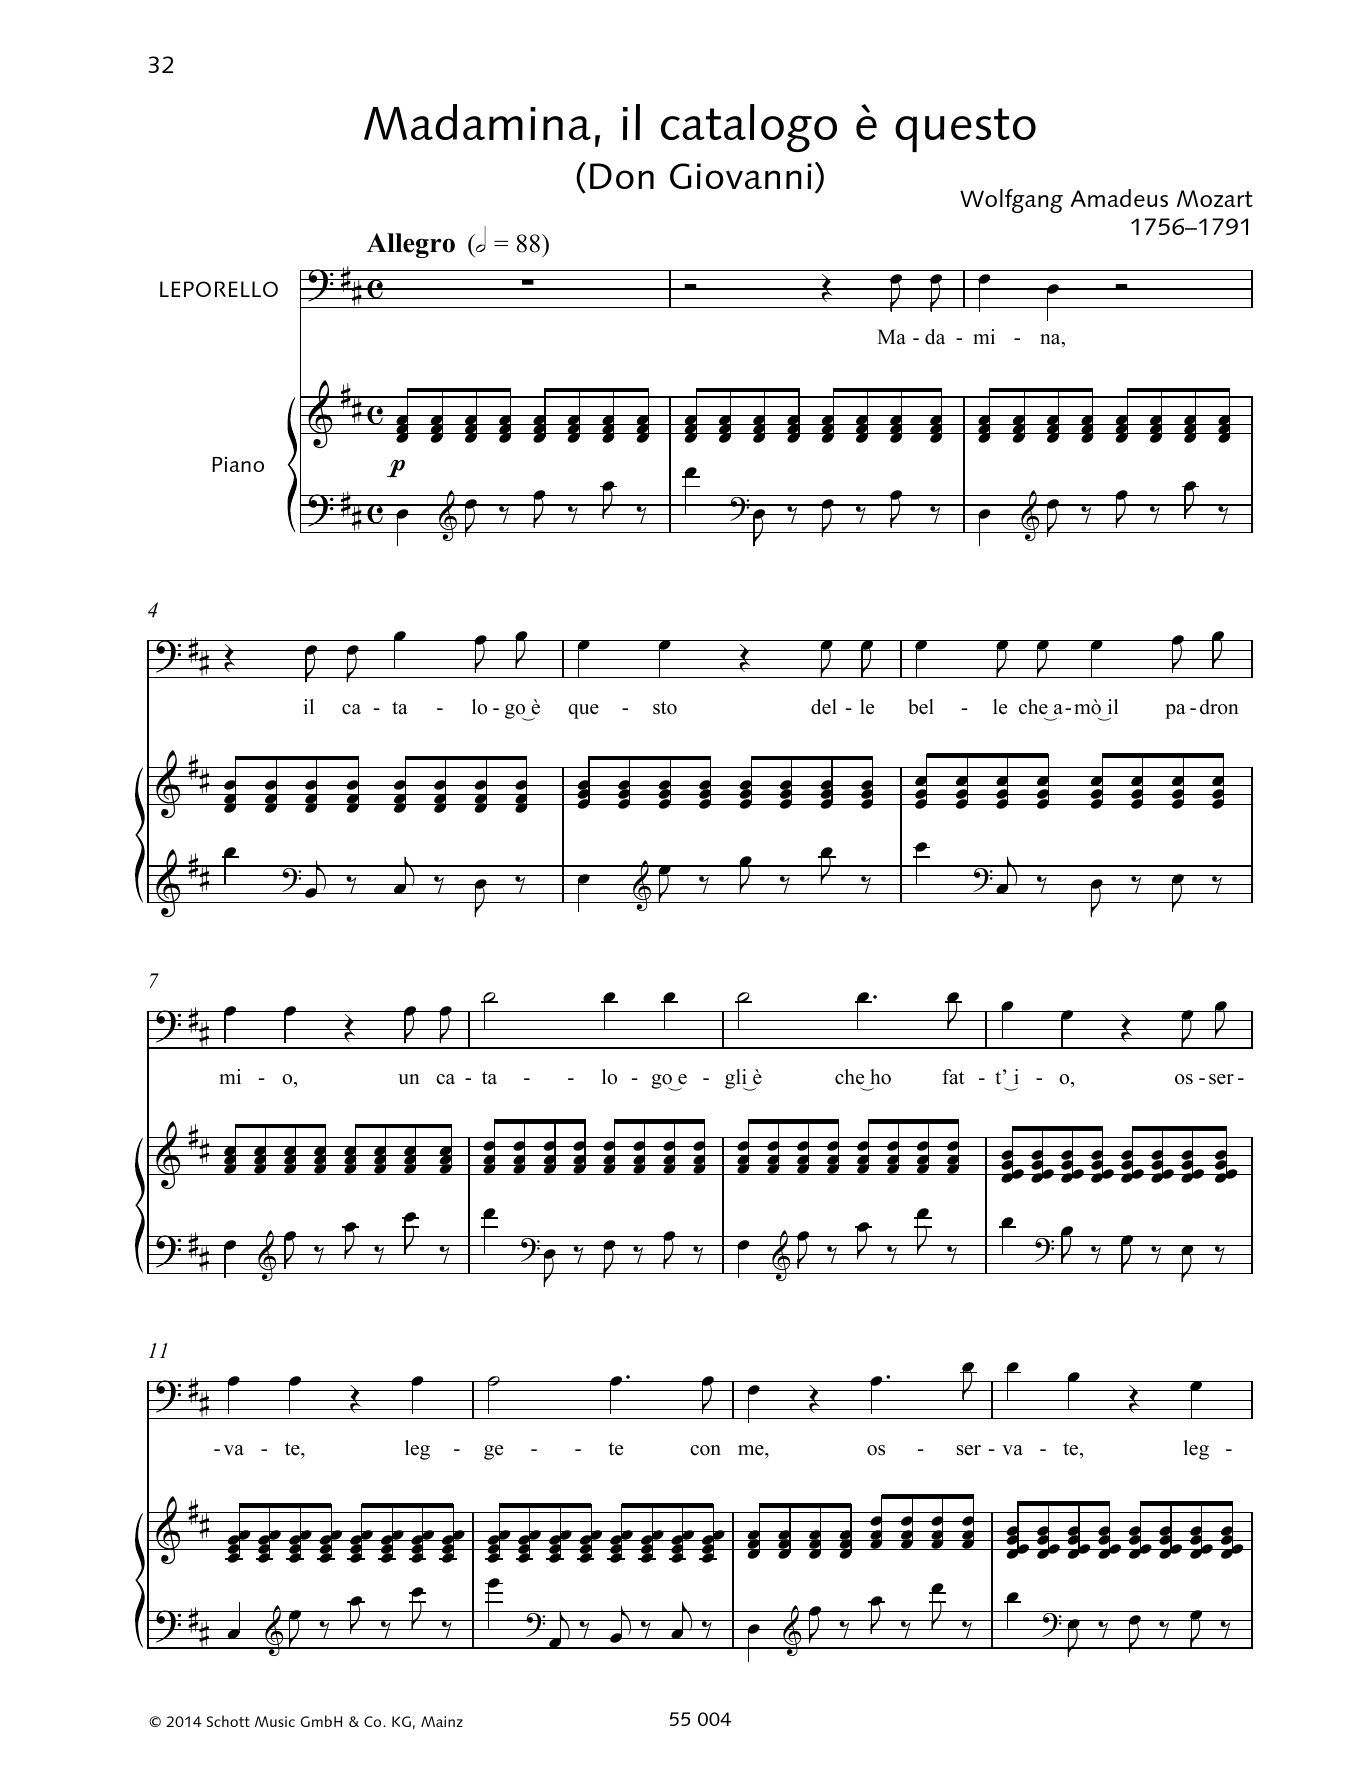 Wolfgang Amadeus Mozart Madamina, il catalogo è questo Sheet Music Notes & Chords for Piano & Vocal - Download or Print PDF